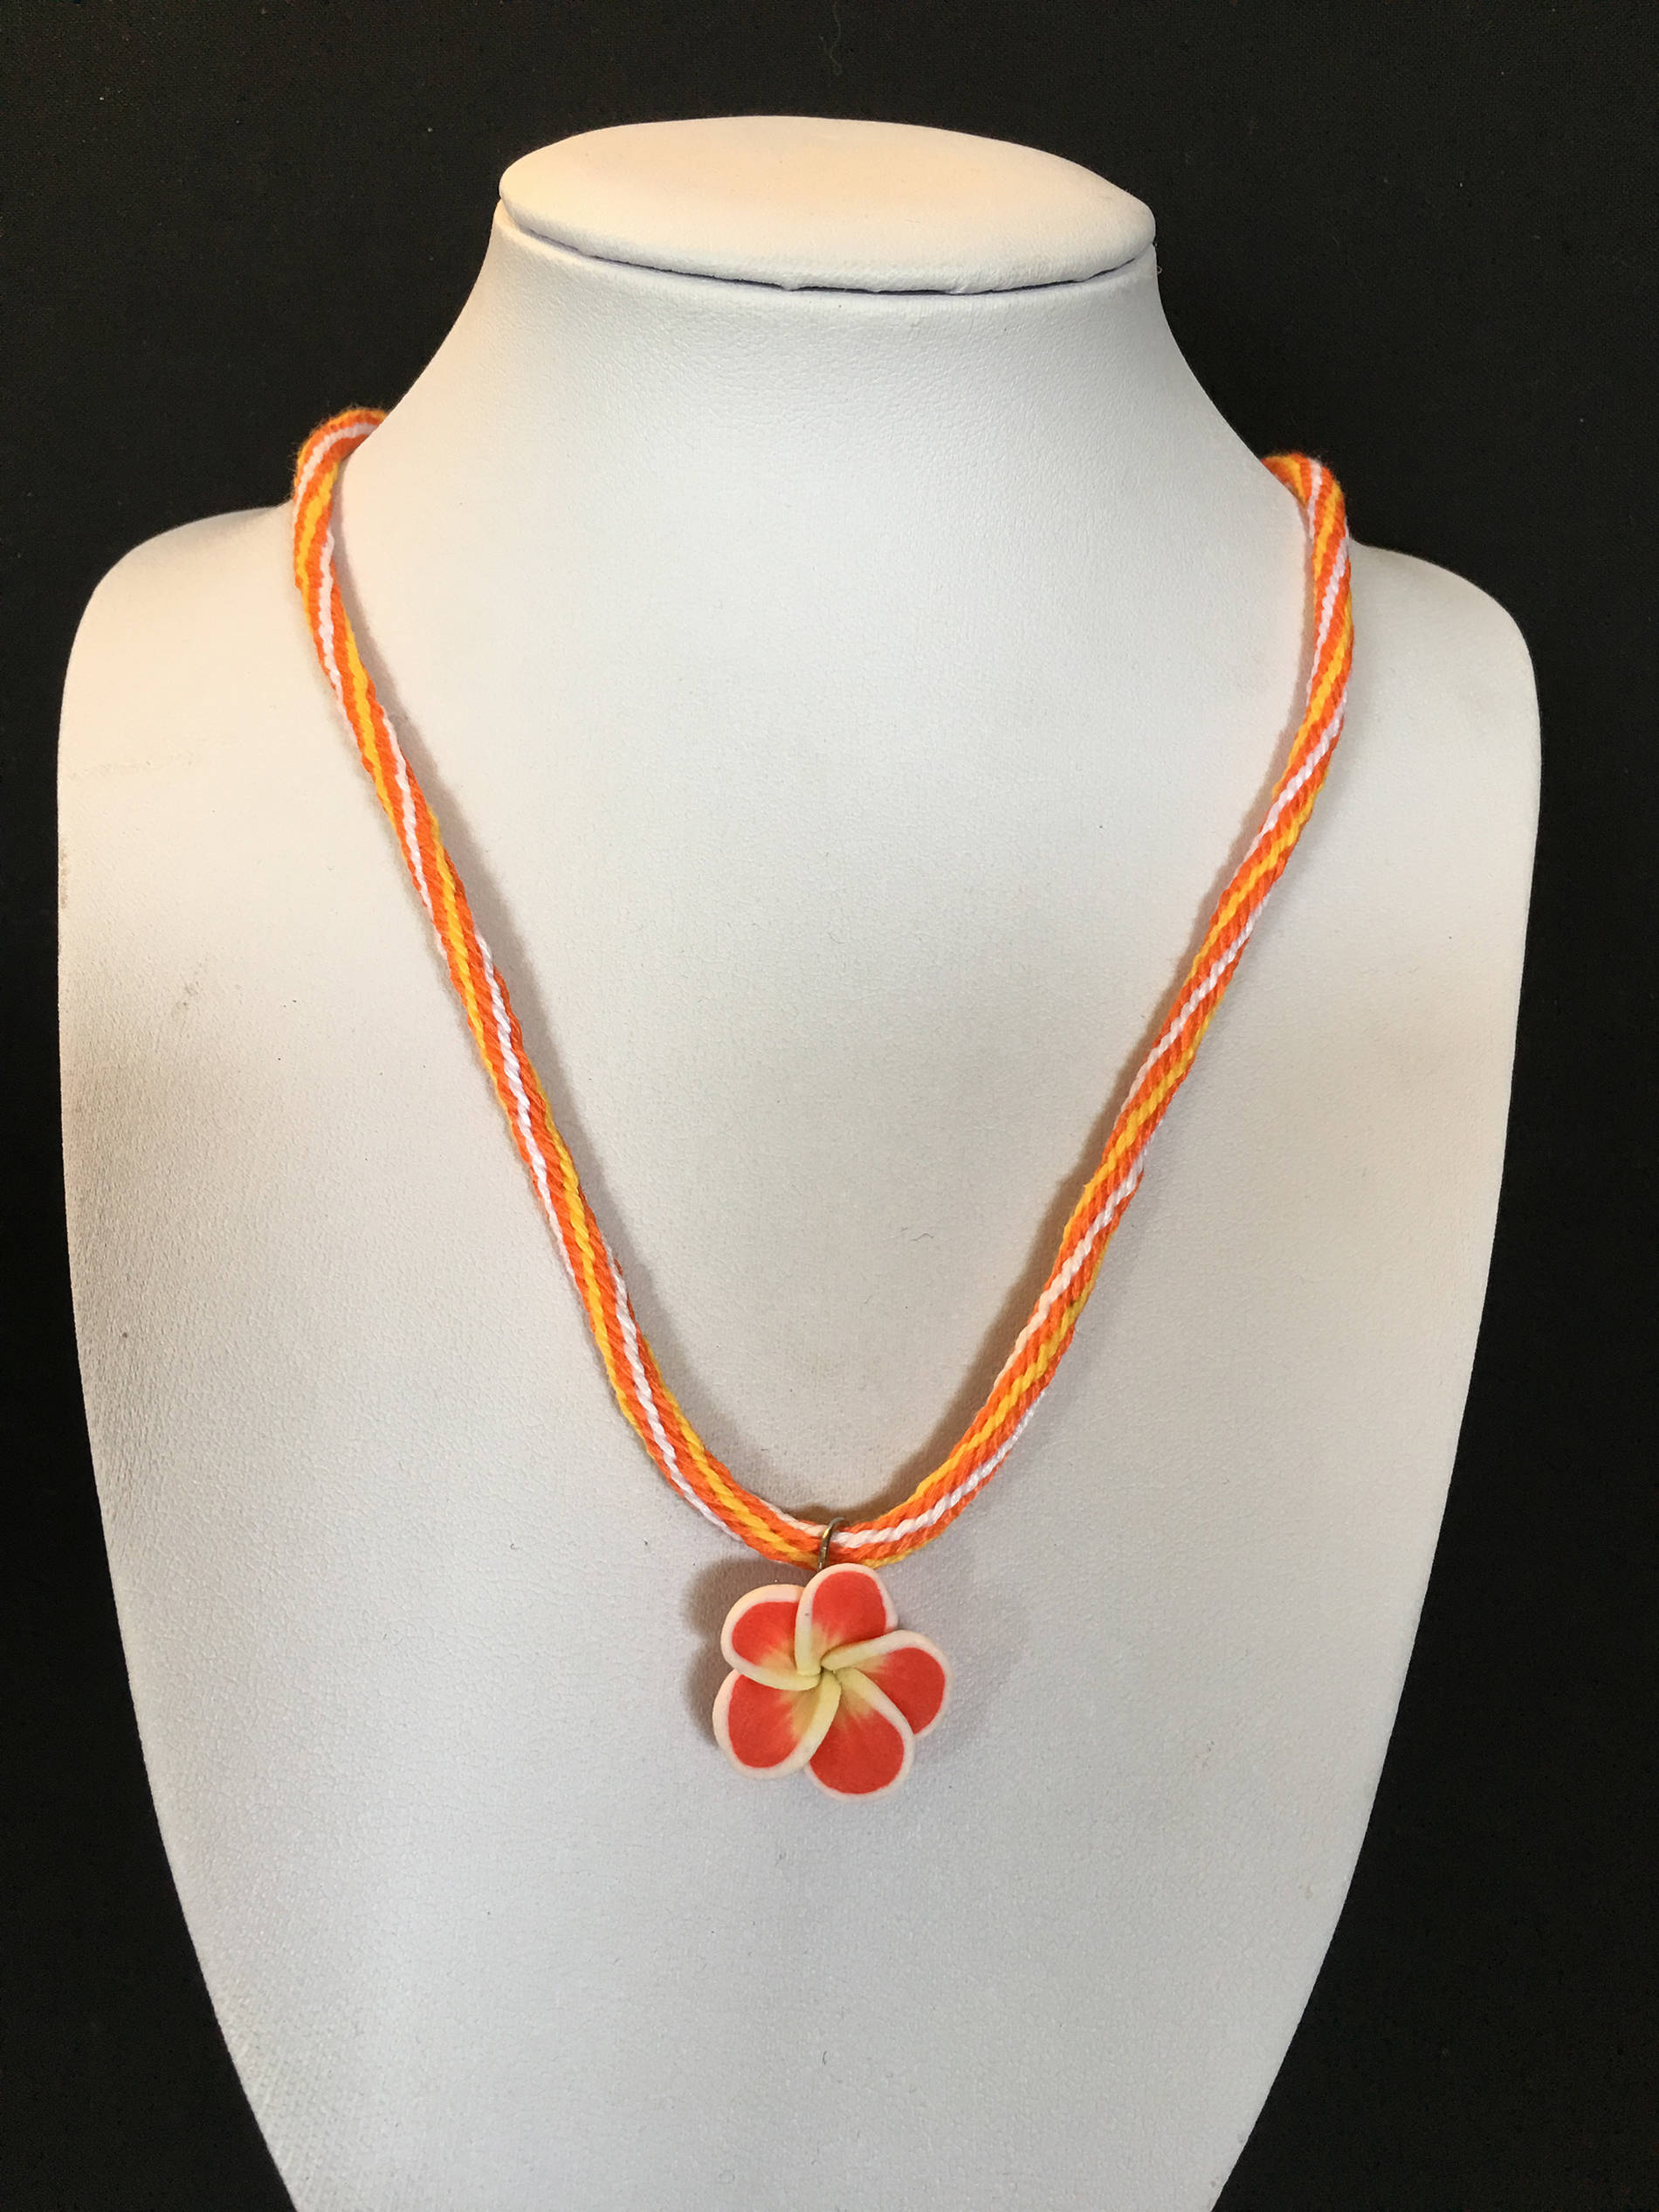 tahiti créa - Tahiti Iti créa - Rêv'claire - Collier coton tressé art japonais Kumihimo fleur fimo orange coeur jaune - coton DMC